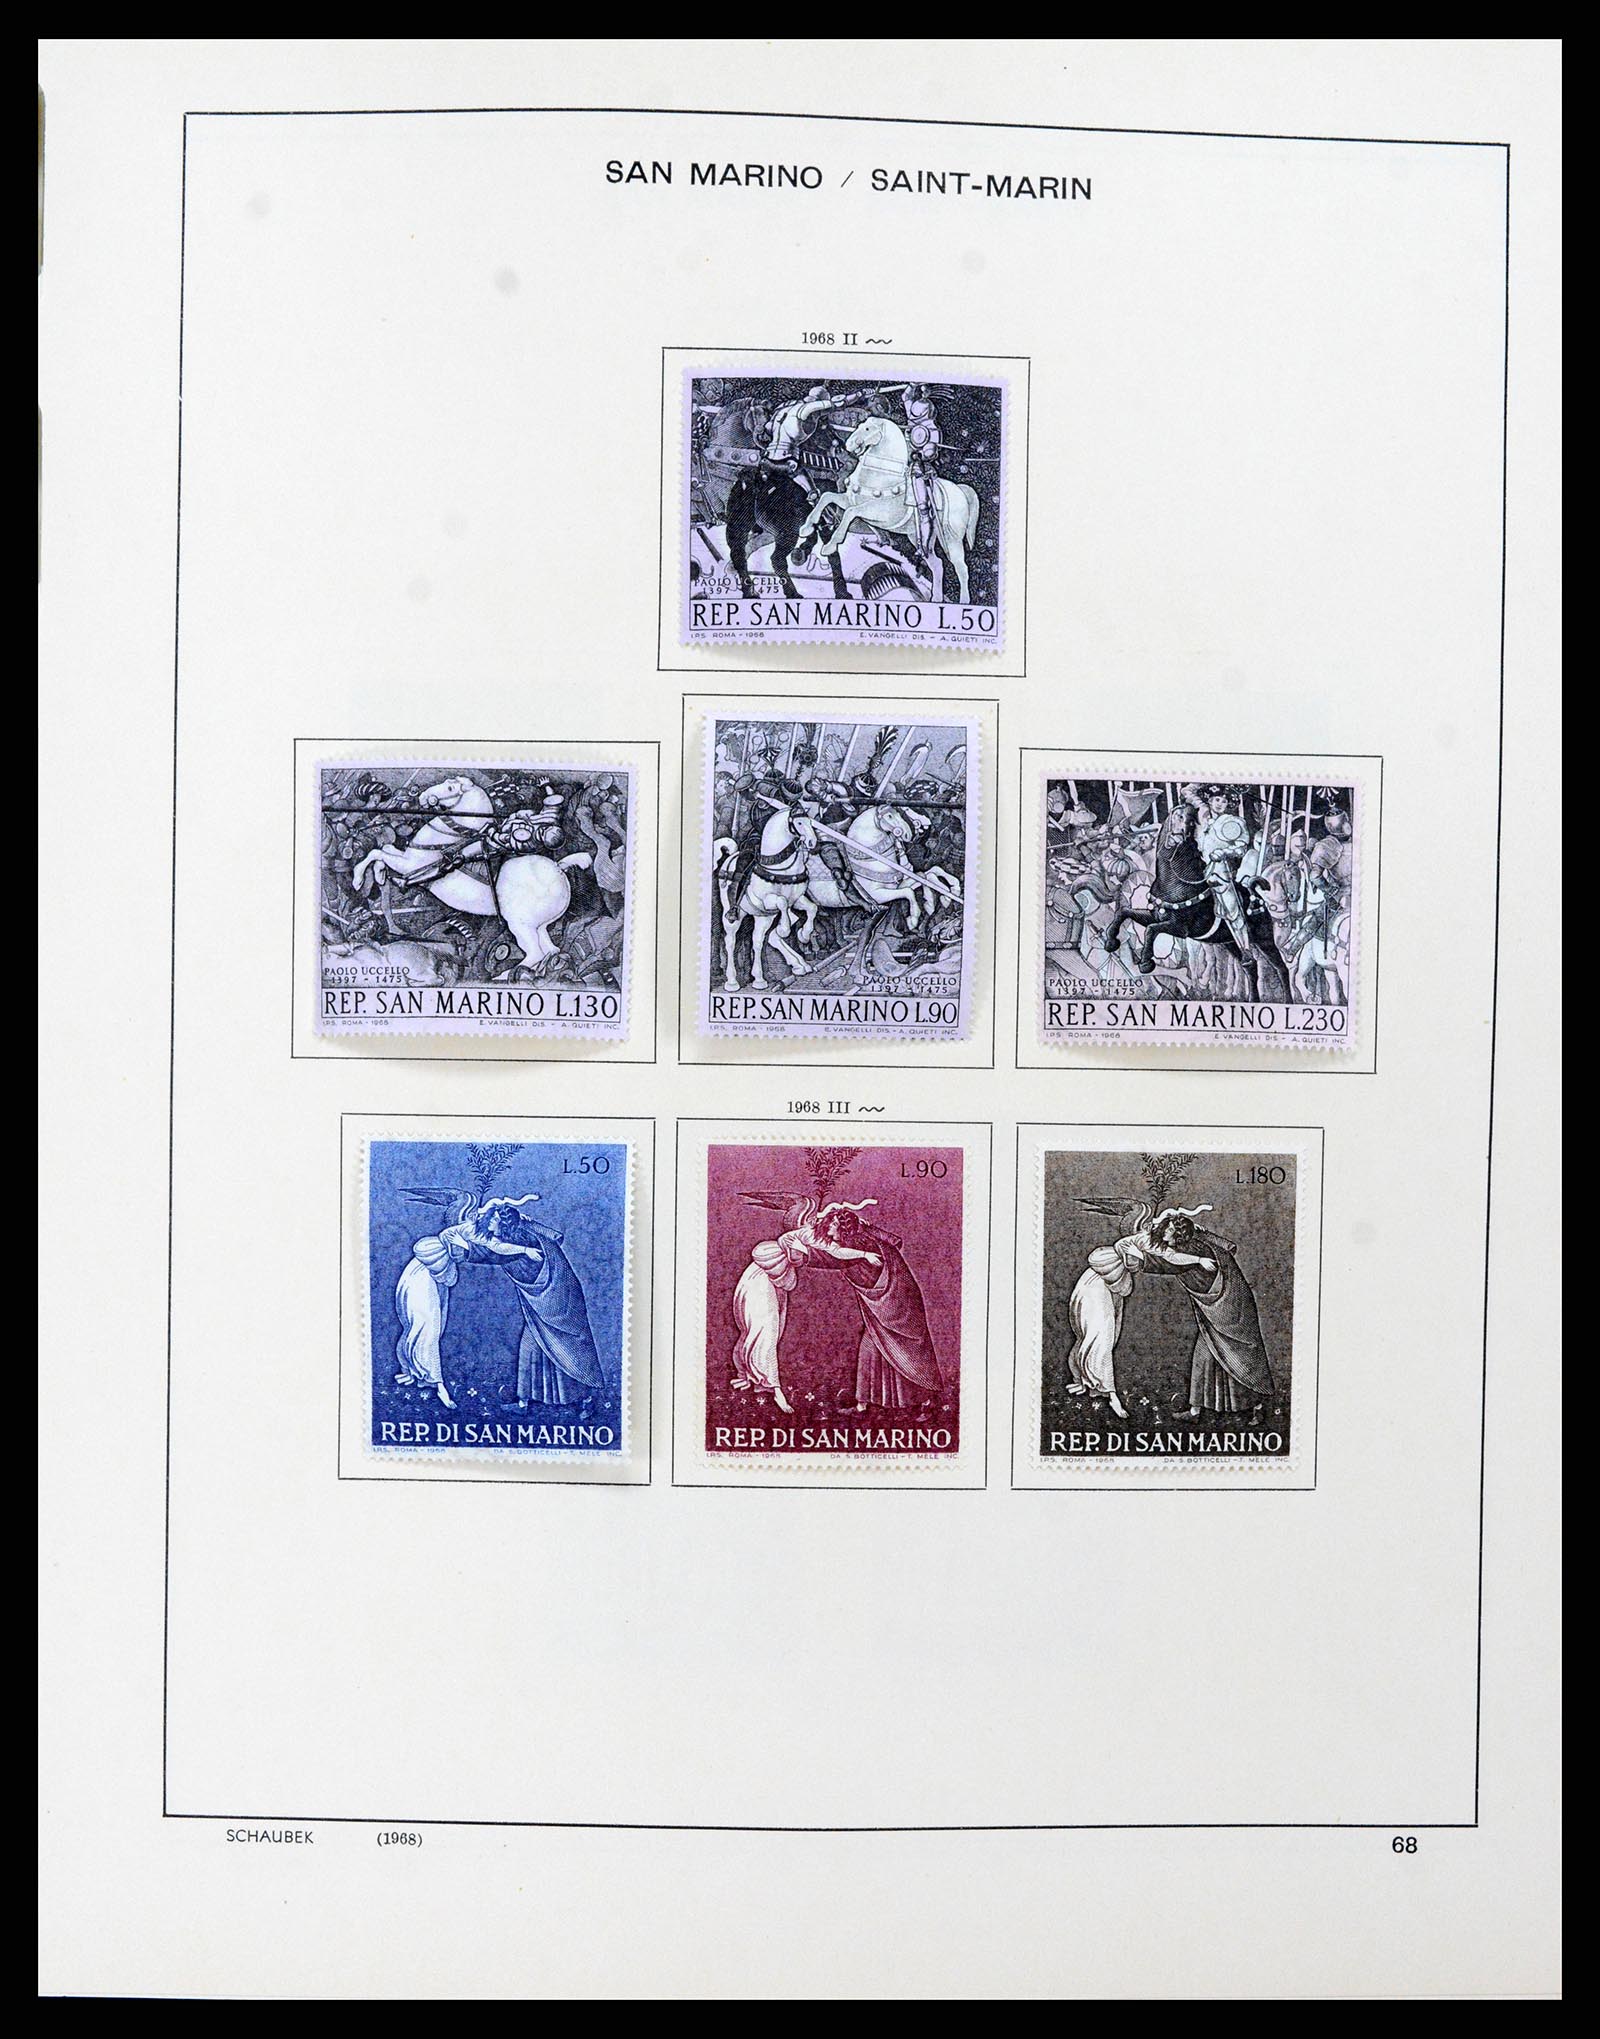 37556 071 - Stamp collection 37556 San Marino 1877-2017.